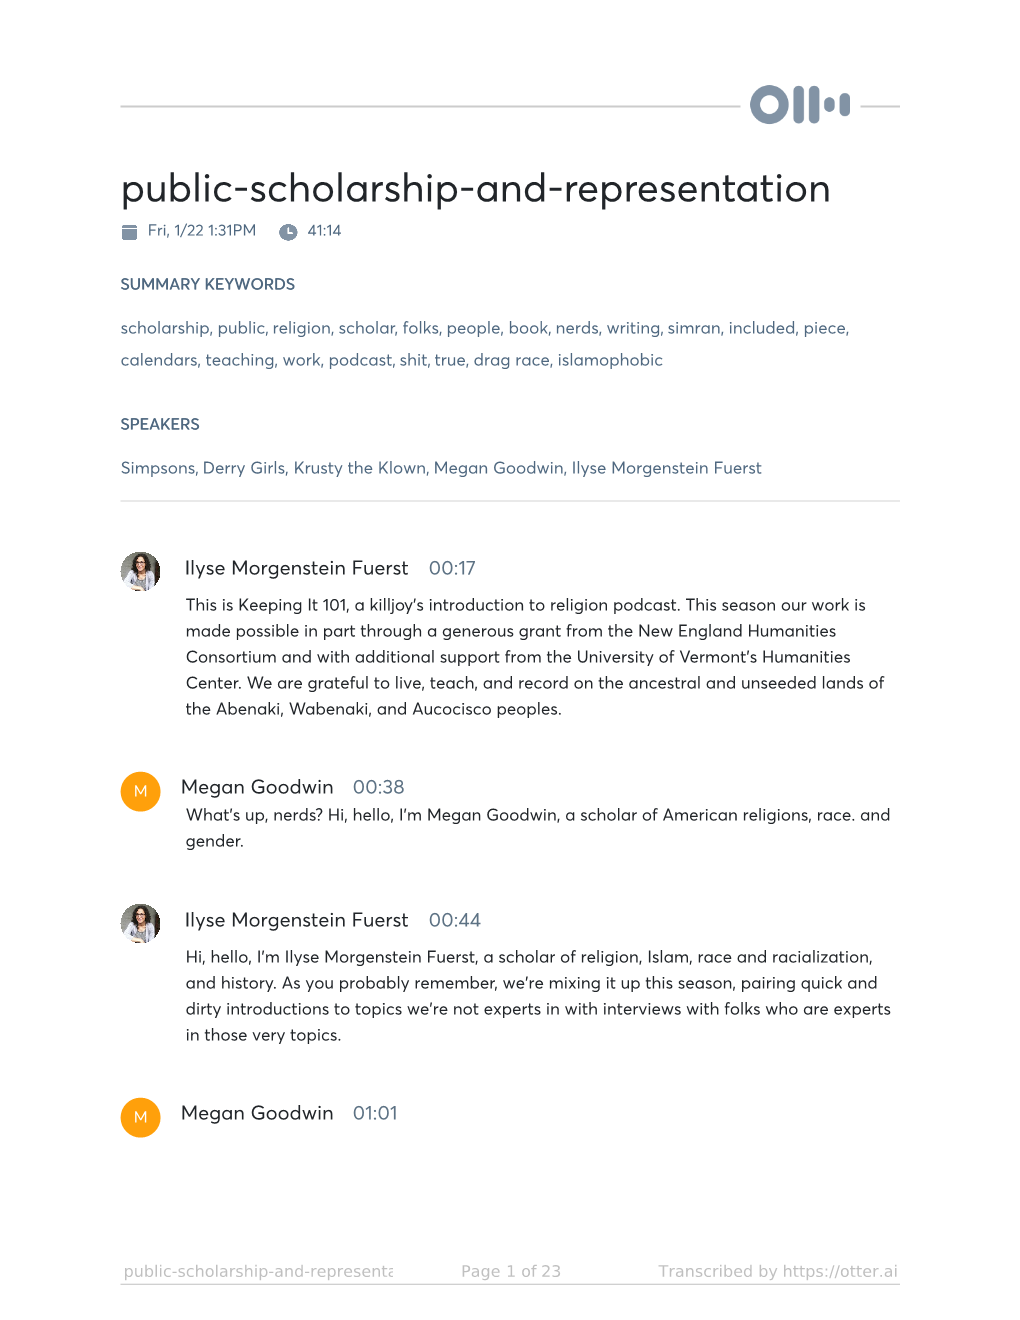 Public-Scholarship-And-Representation Fri, 1/22 1:31PM 41:14